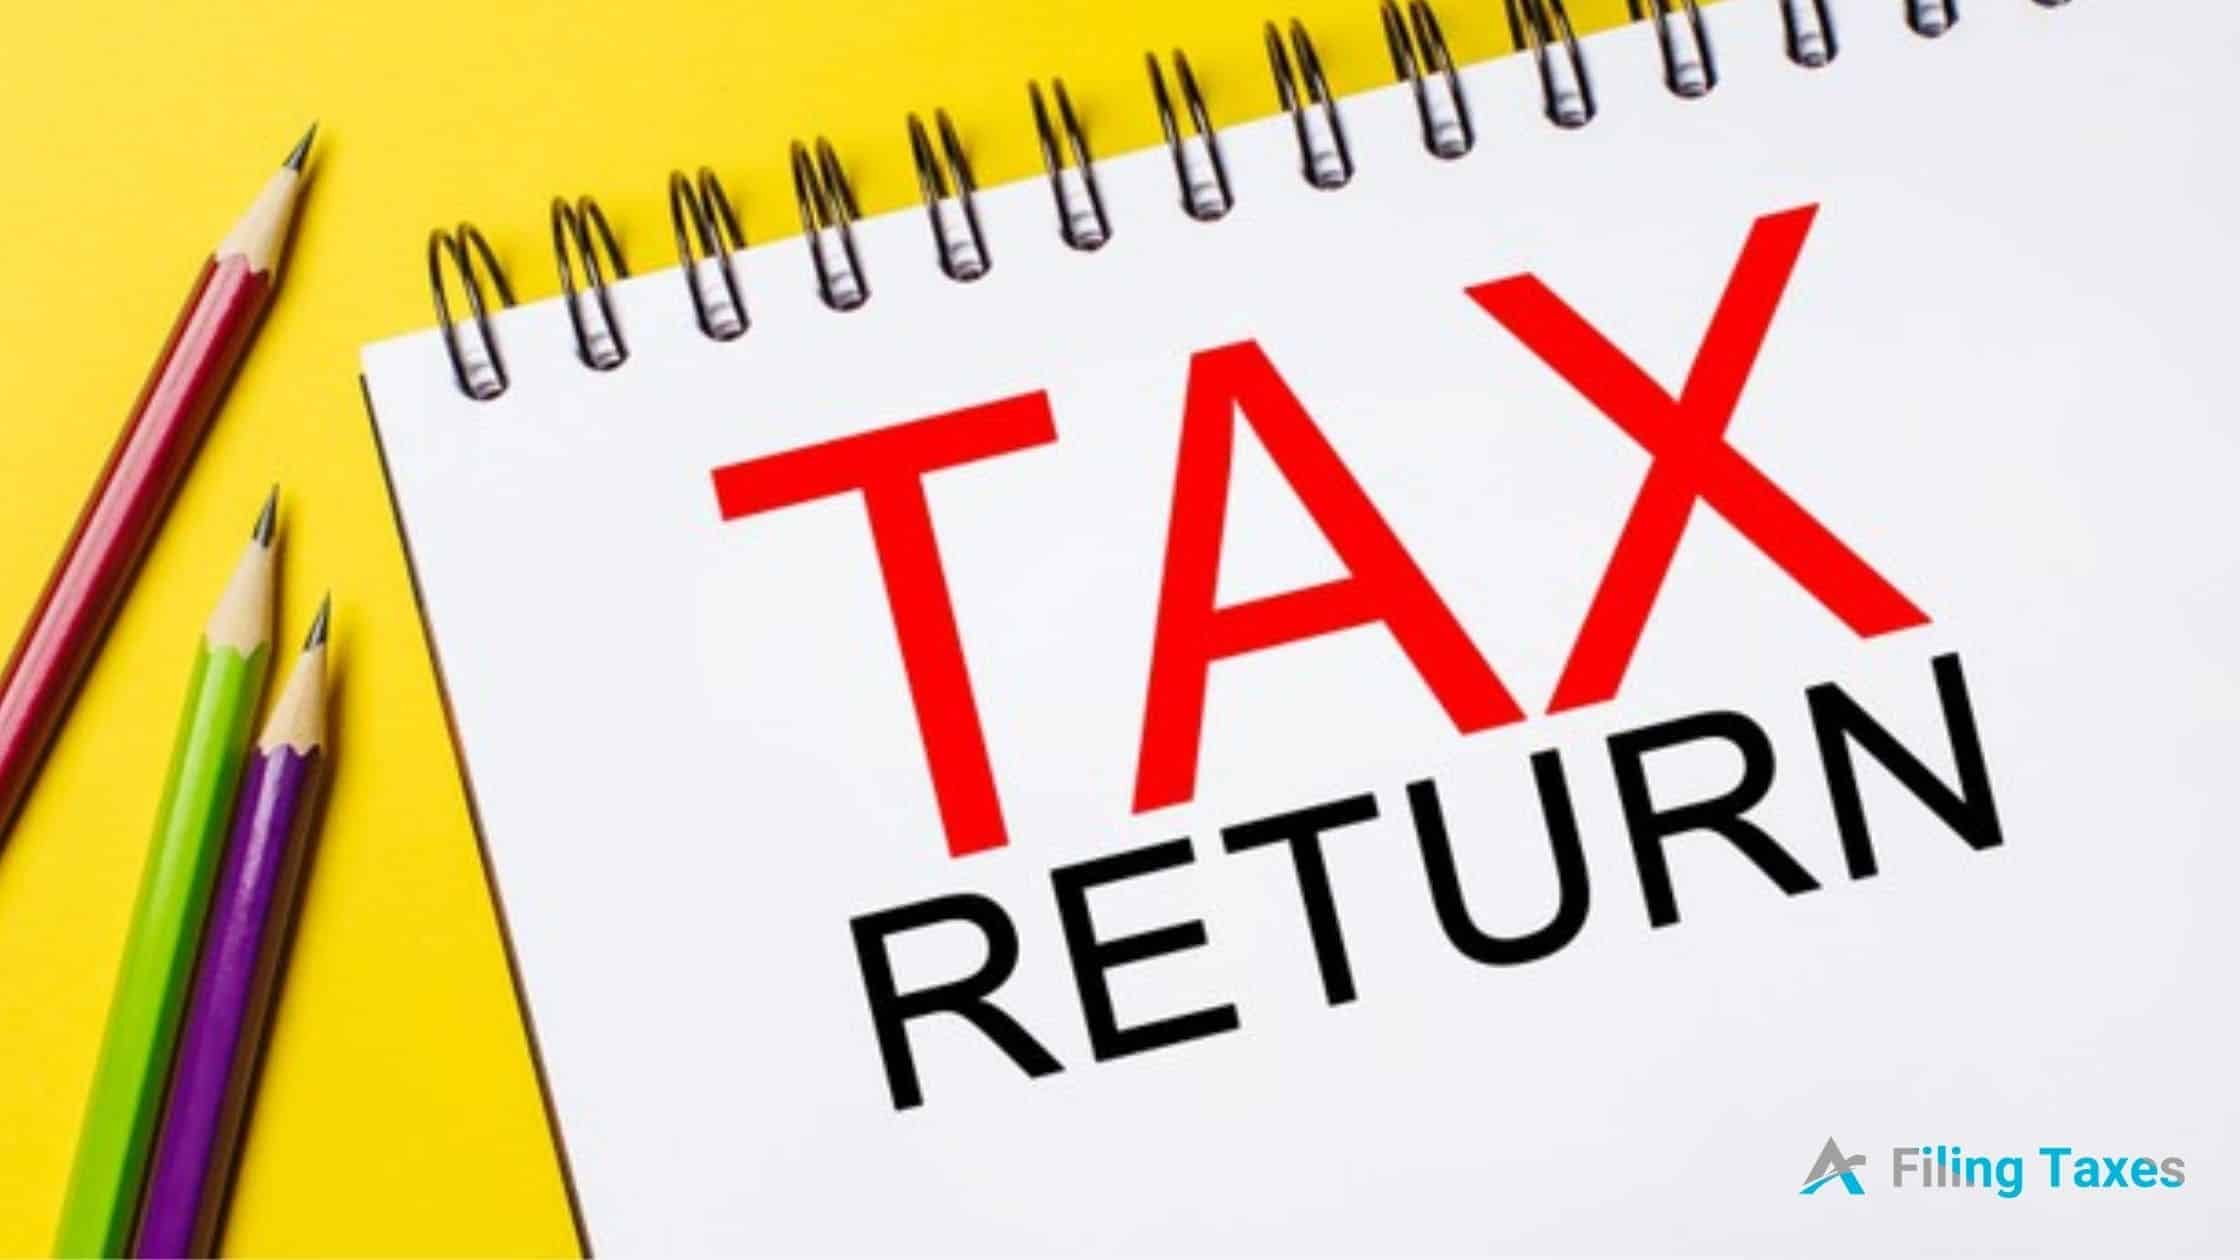 How to amend a tax return